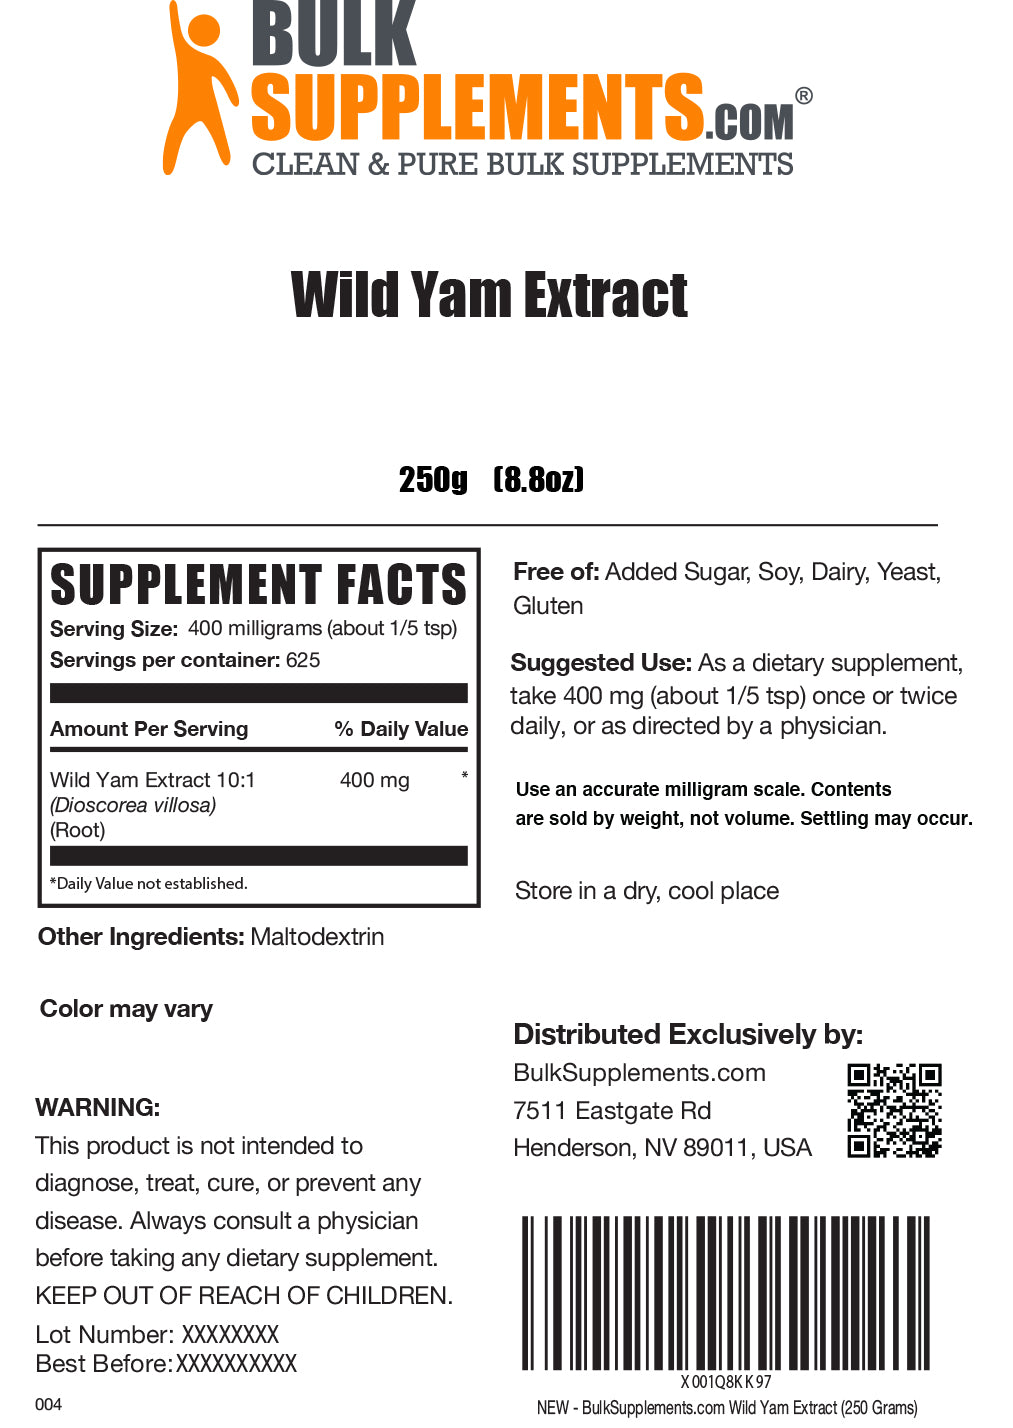 Wild yam extract powder label 250g